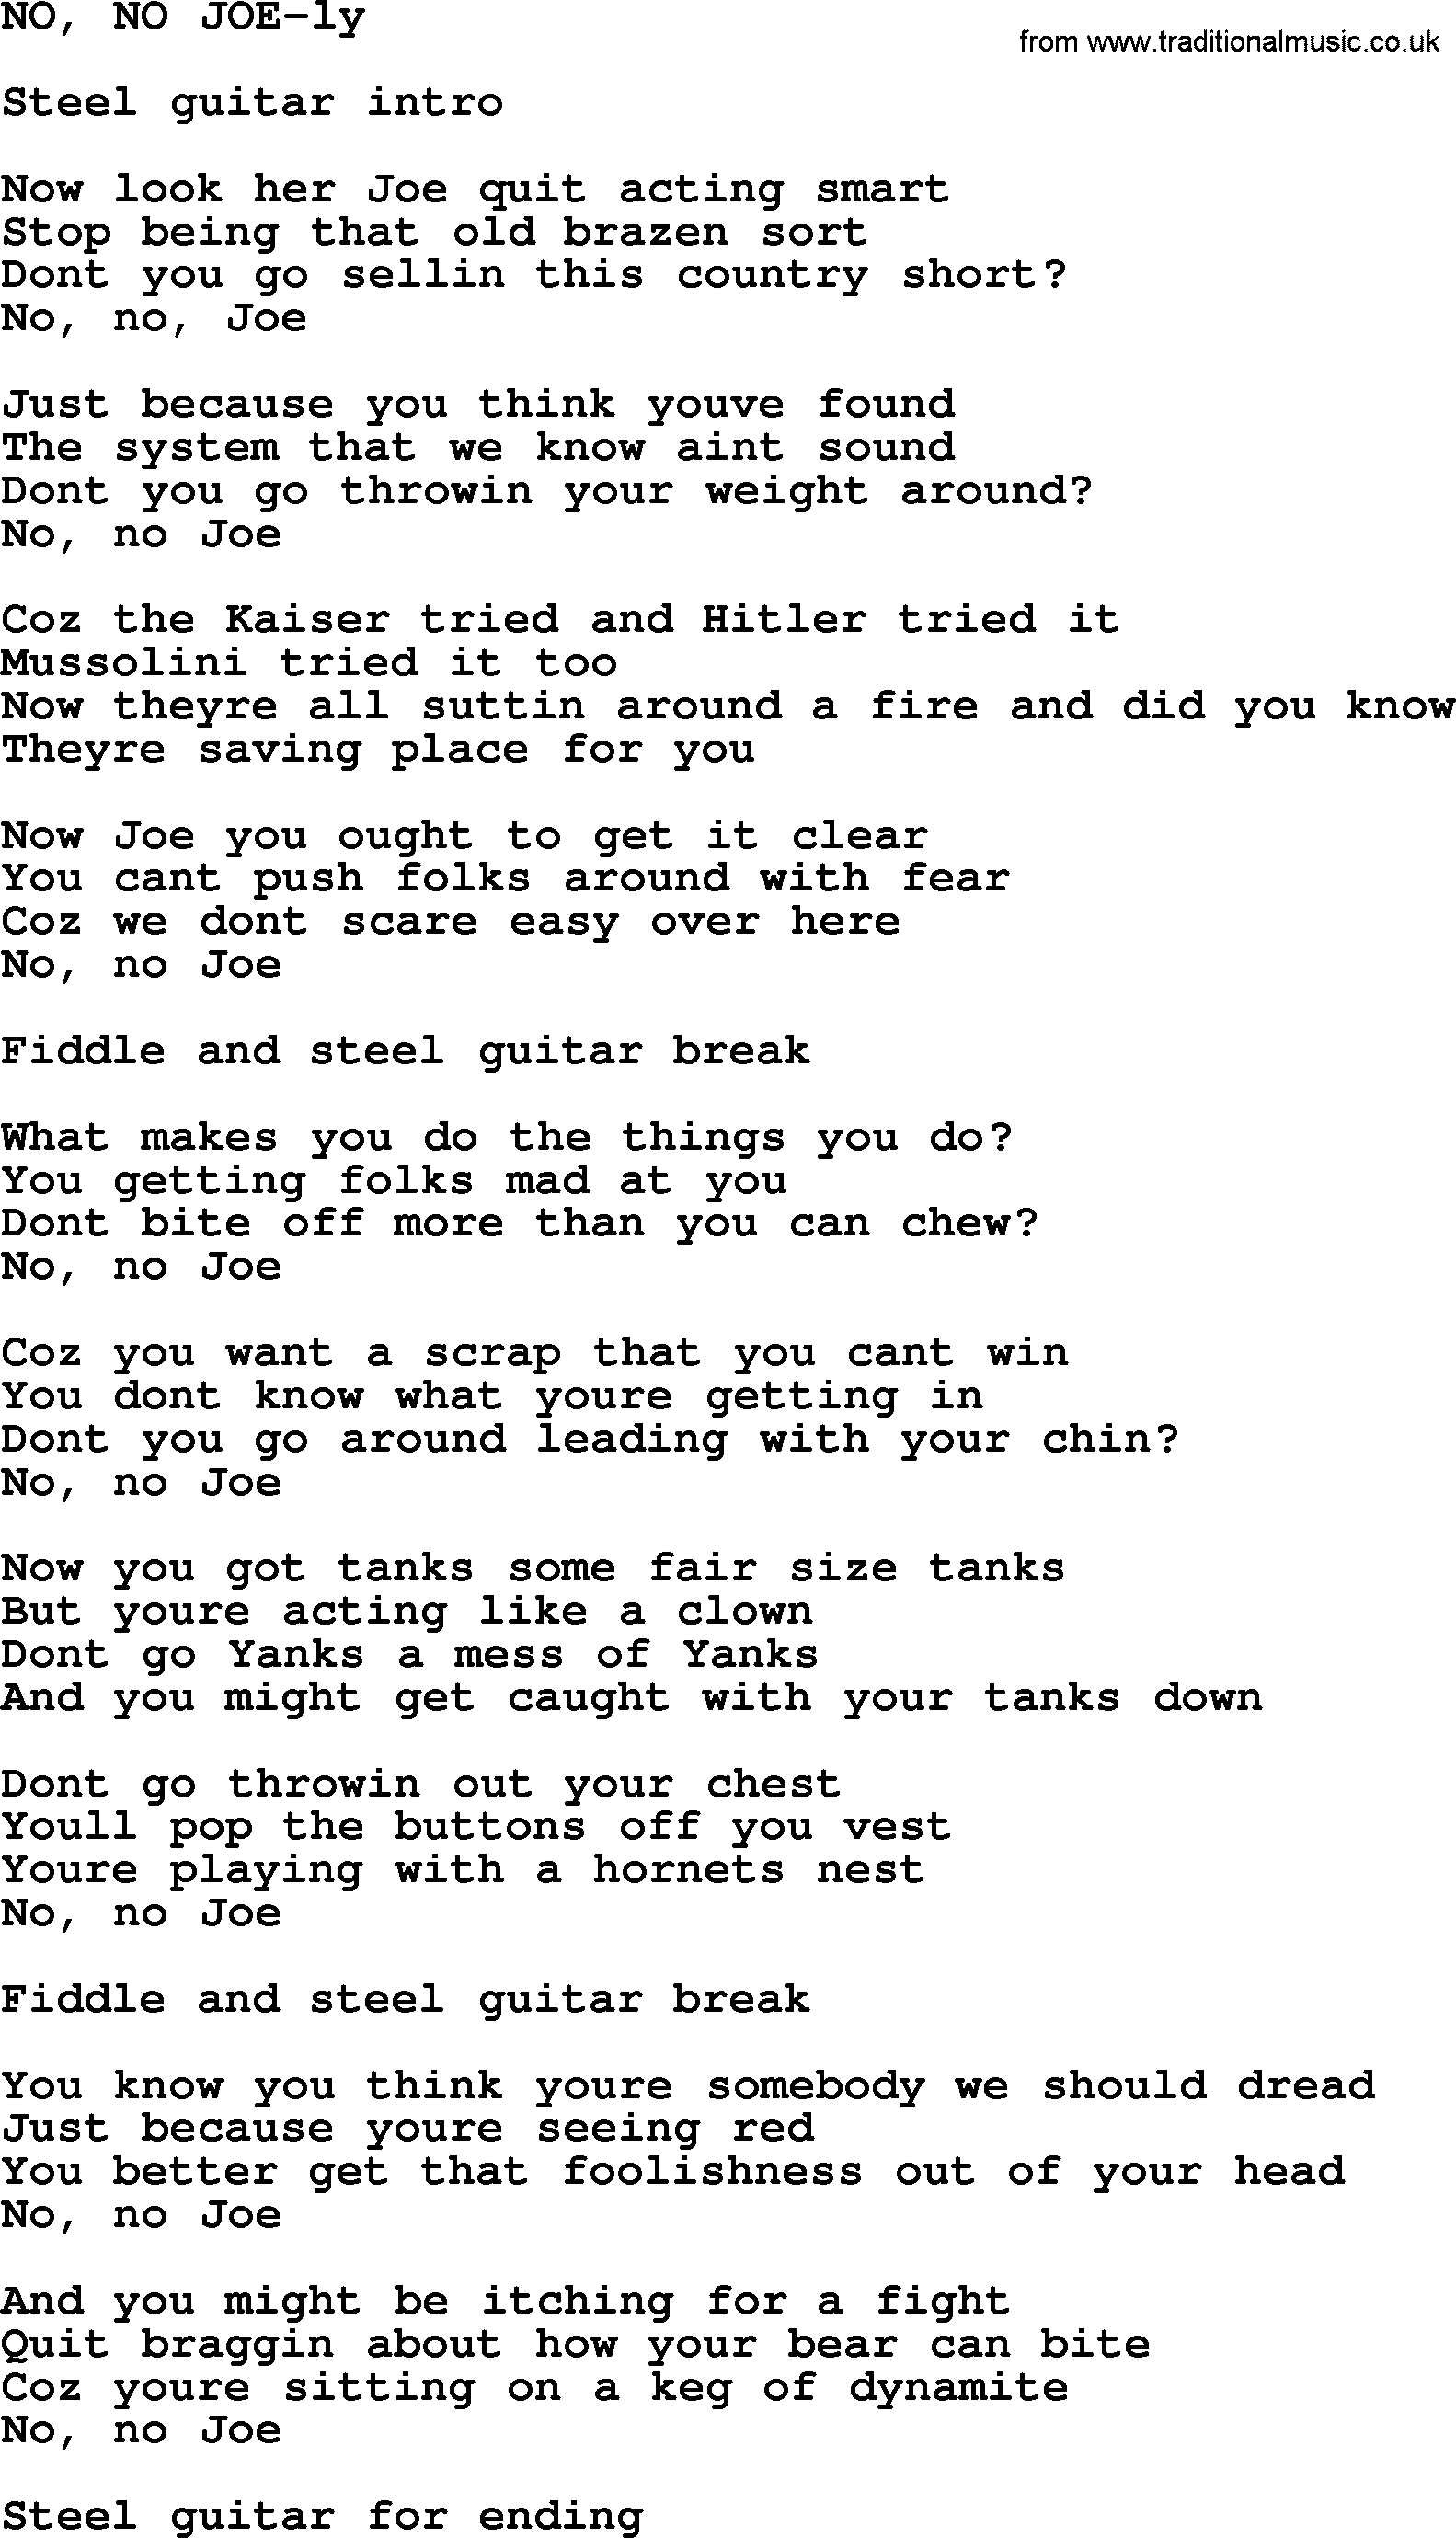 Hank Williams song No, No Joe, lyrics